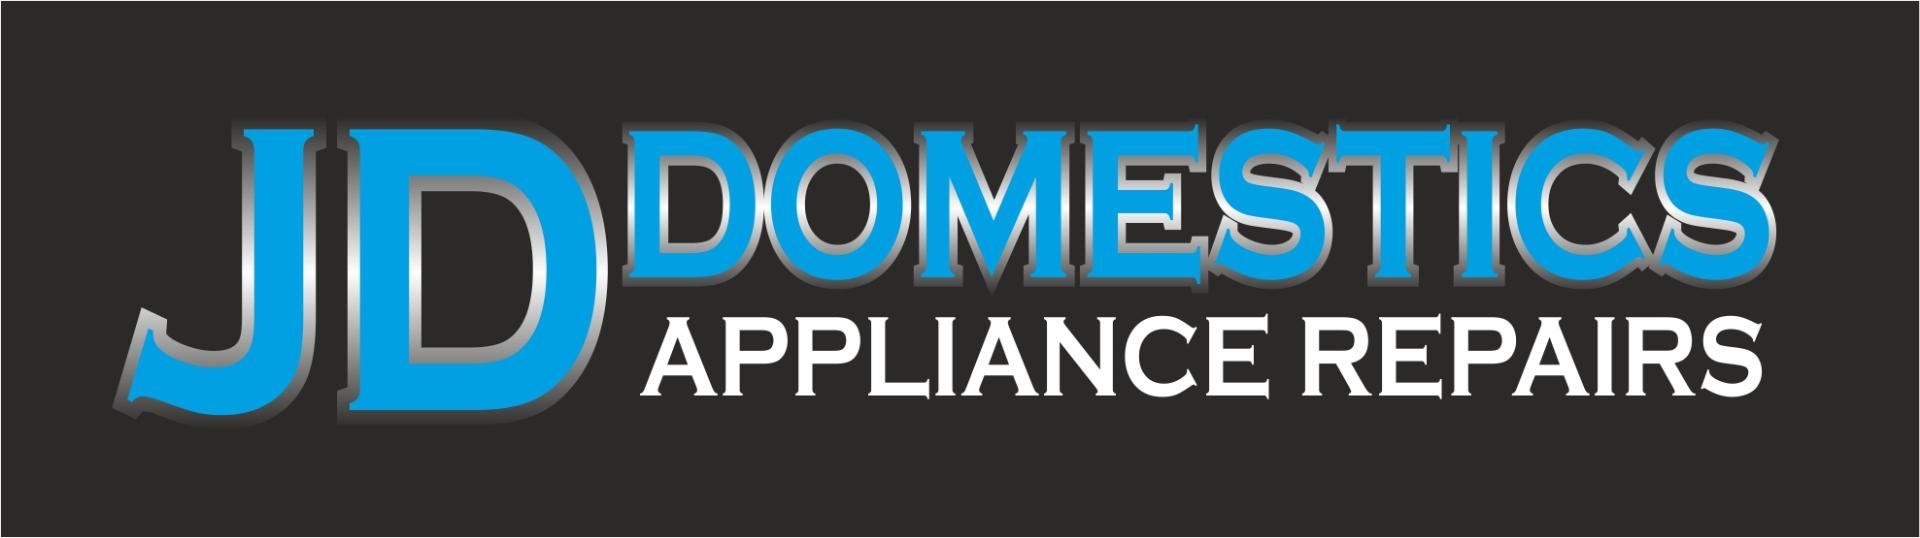 JD Domestics - Appliance Repair Specialists in Ashley Cross / Lower Parkstone (1)